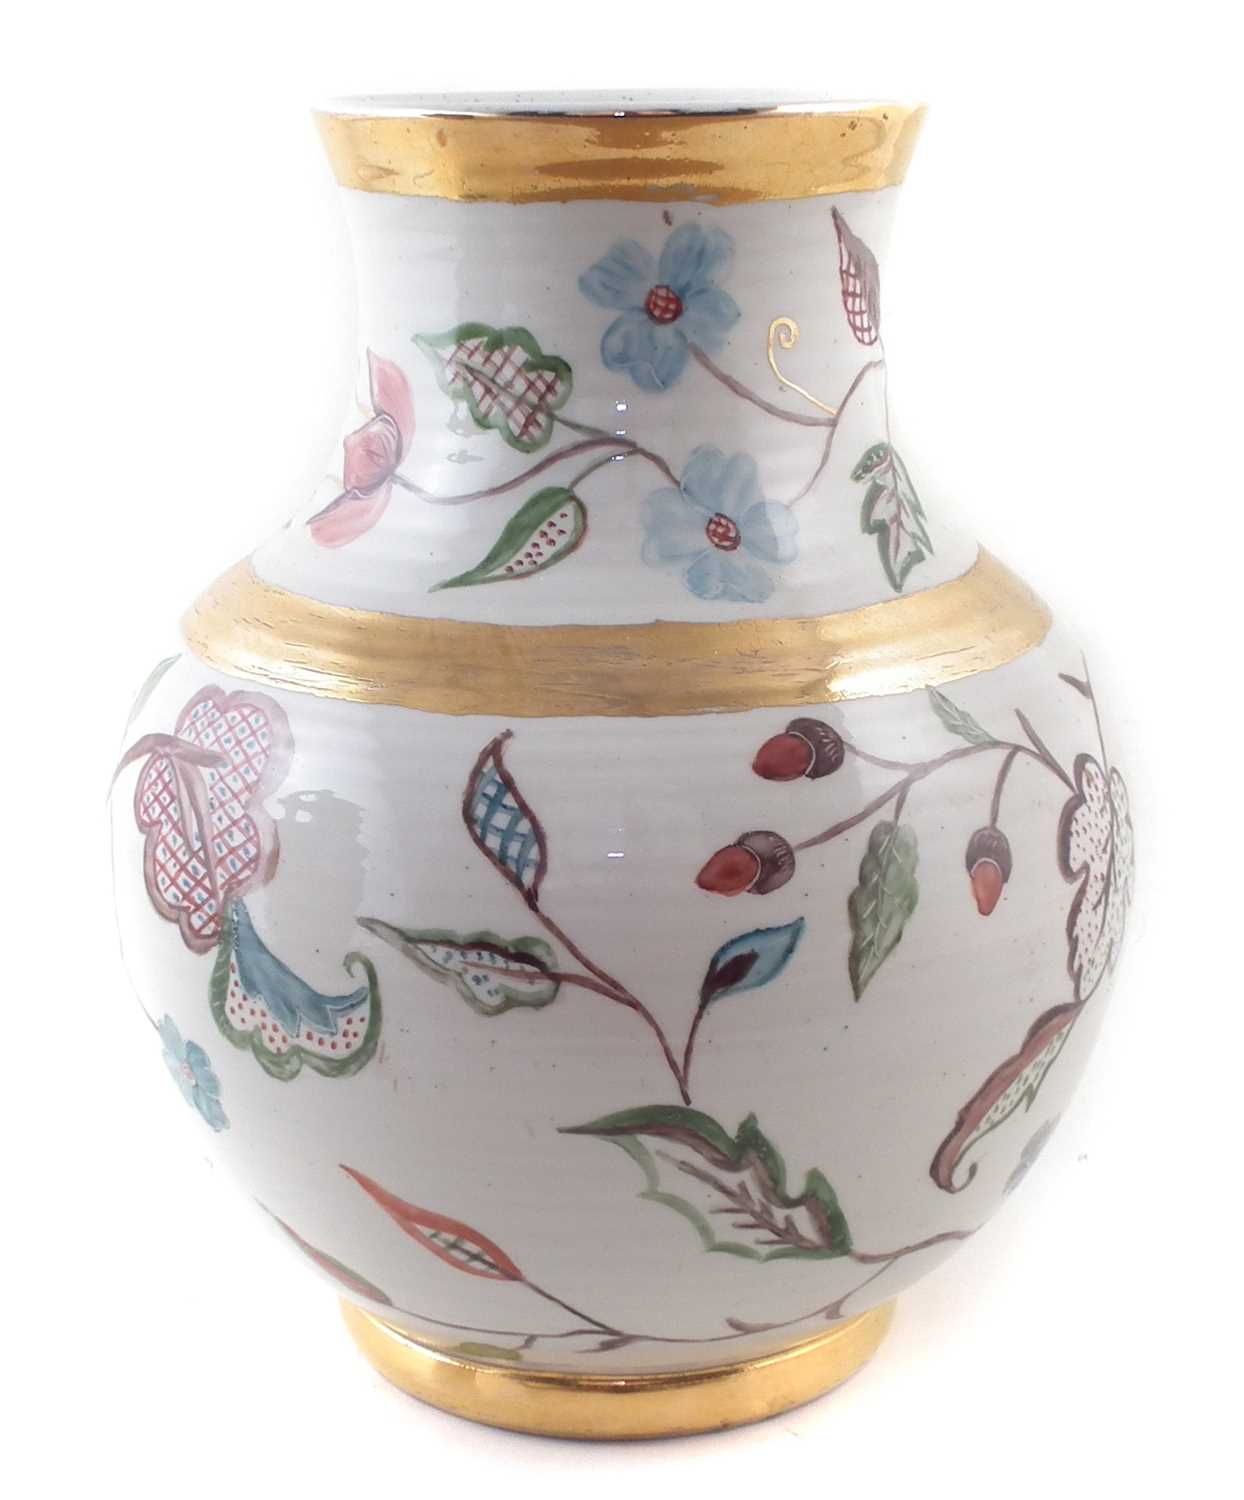 Lot 163 - Moorcroft vase